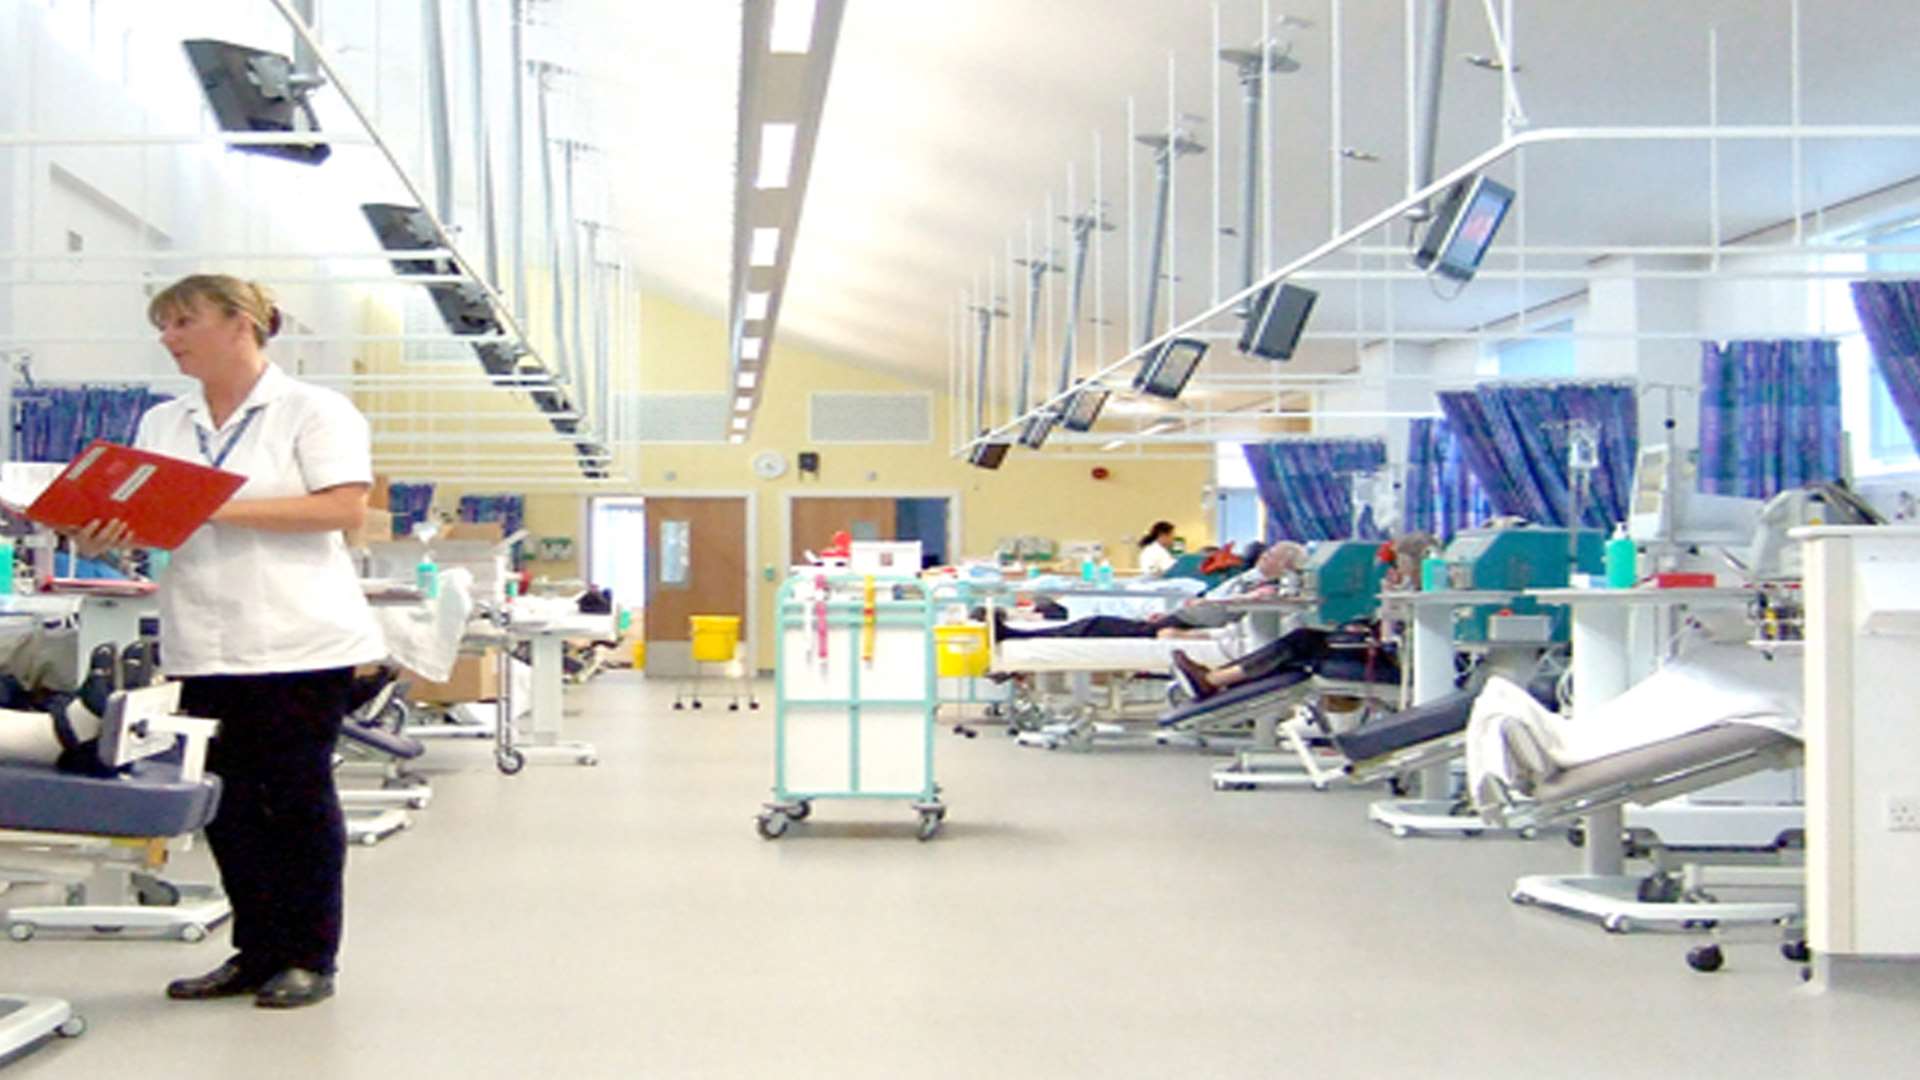 A dialysis unit. Stock image